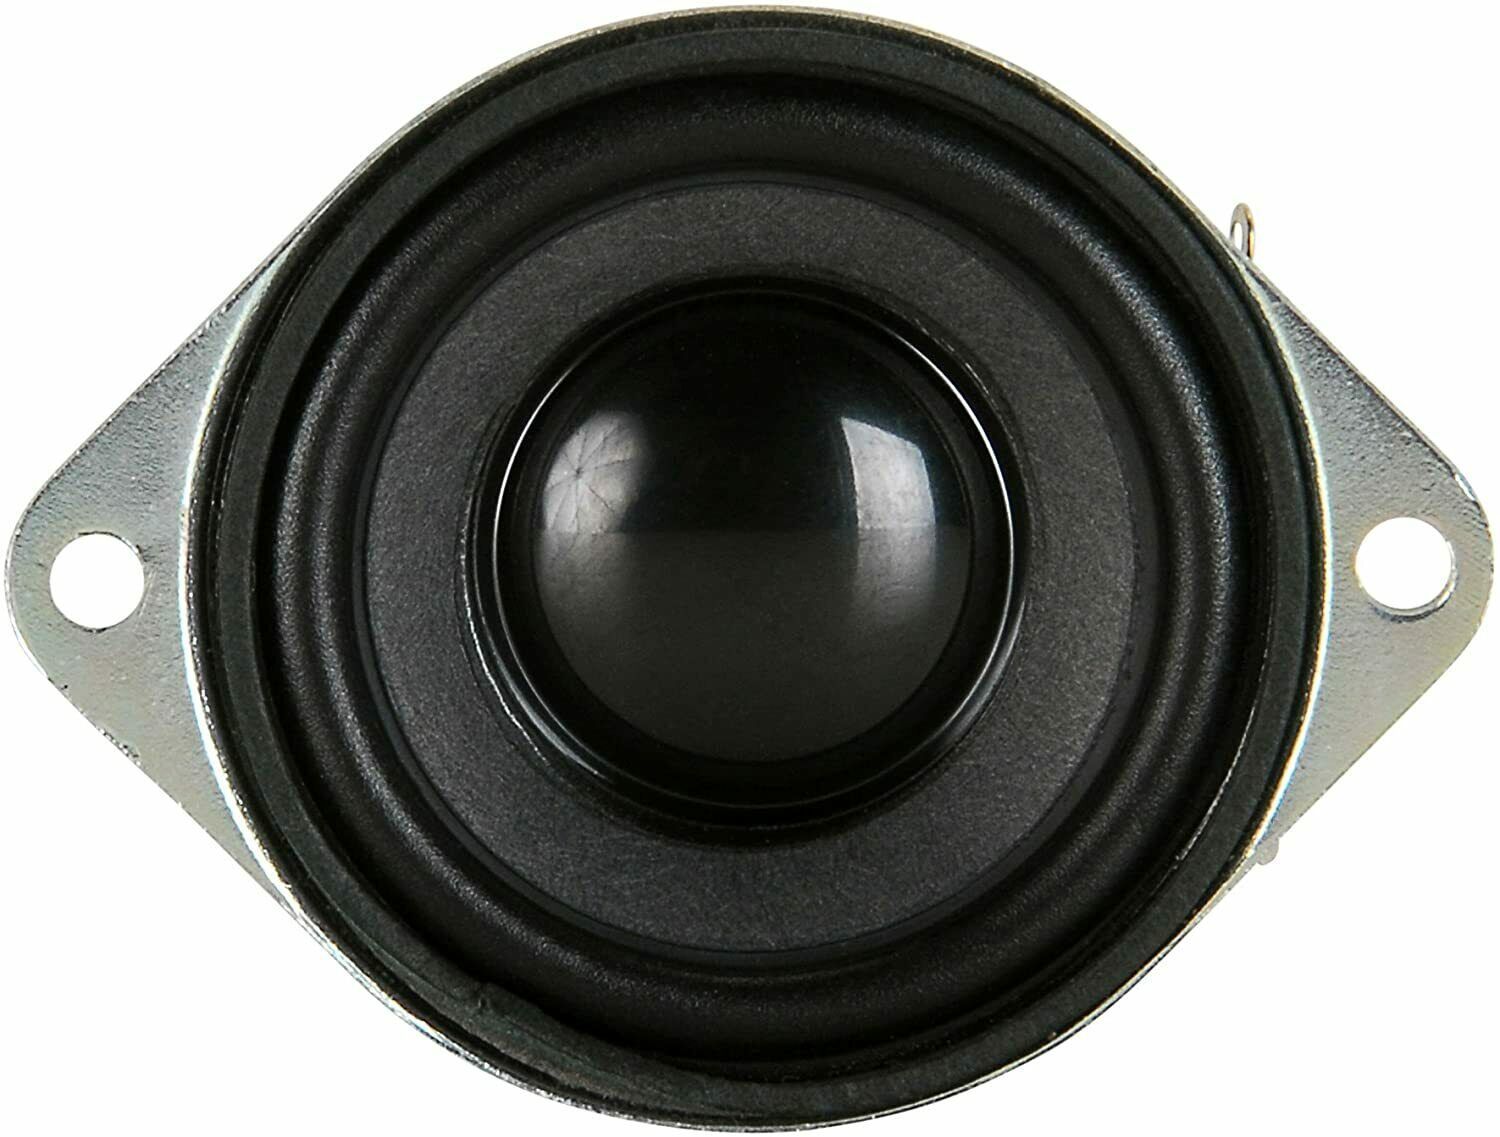 Primary image for Dayton Audio - CE40P-8 - 1-1/2" Mini Speaker